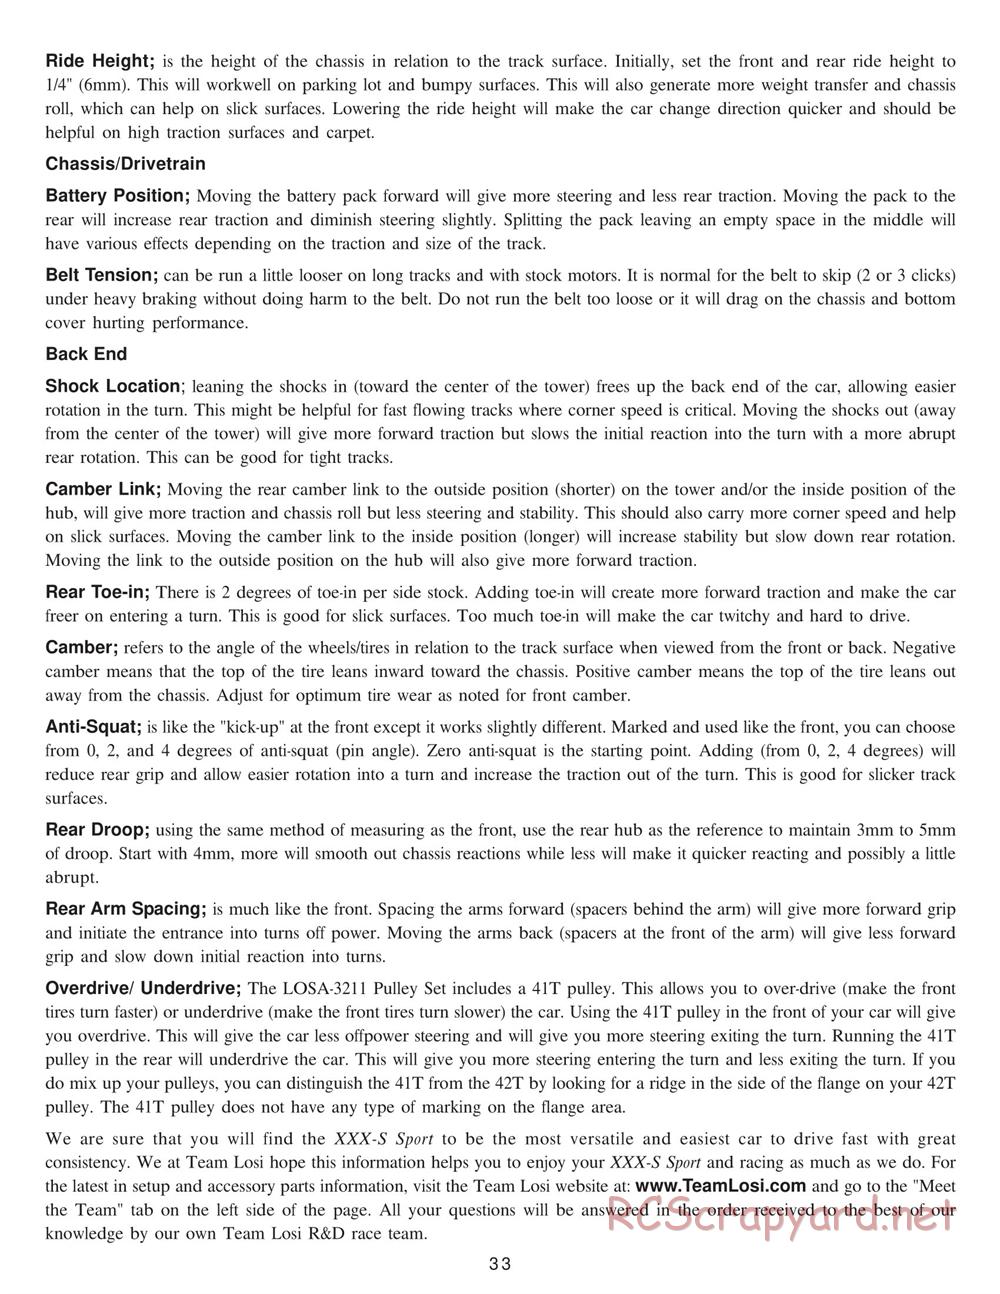 Team Losi - XXX-S Sport RTR II - Manual - Page 36